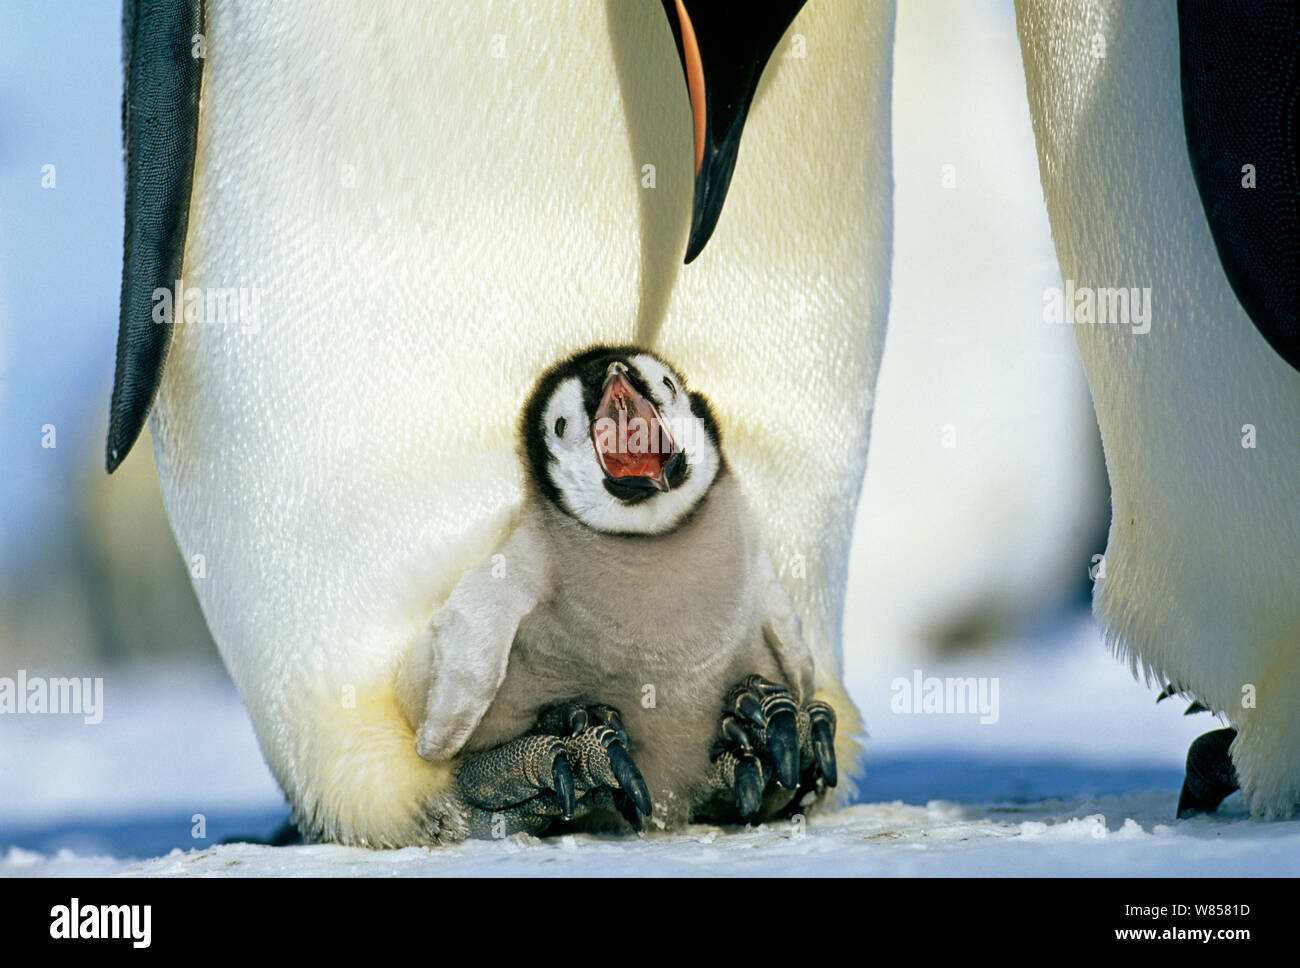 Emperor Penguins (Aptenodytes forsteri) chick on parents feet, begging for food, Weddell Sea, Antarctica Stock Photo